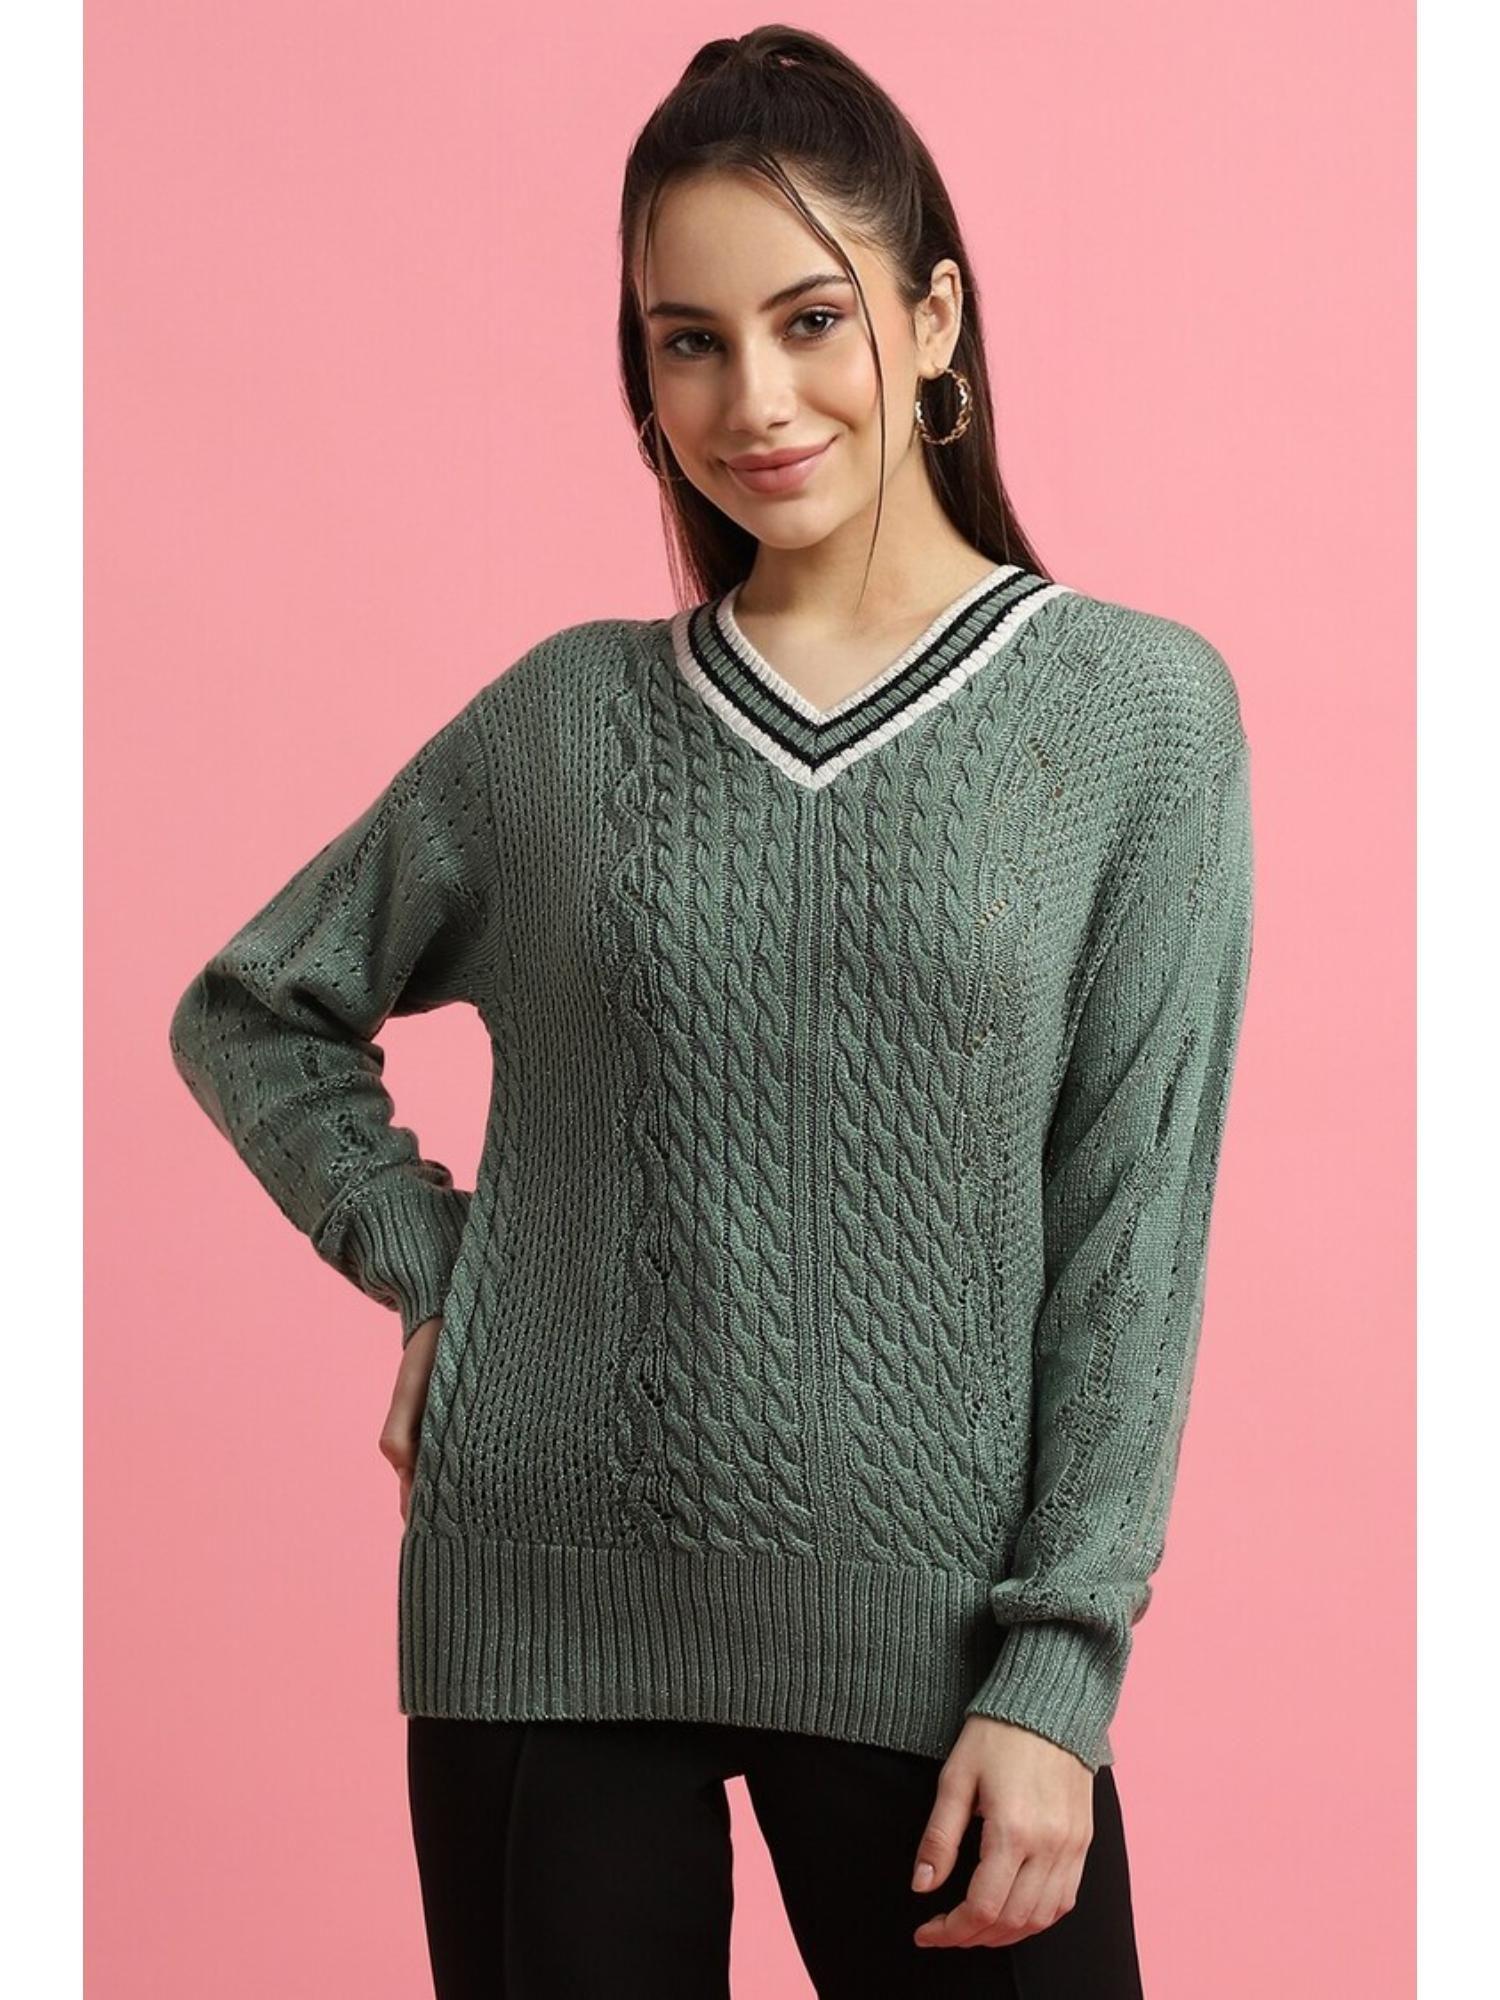 woven-green-sweater